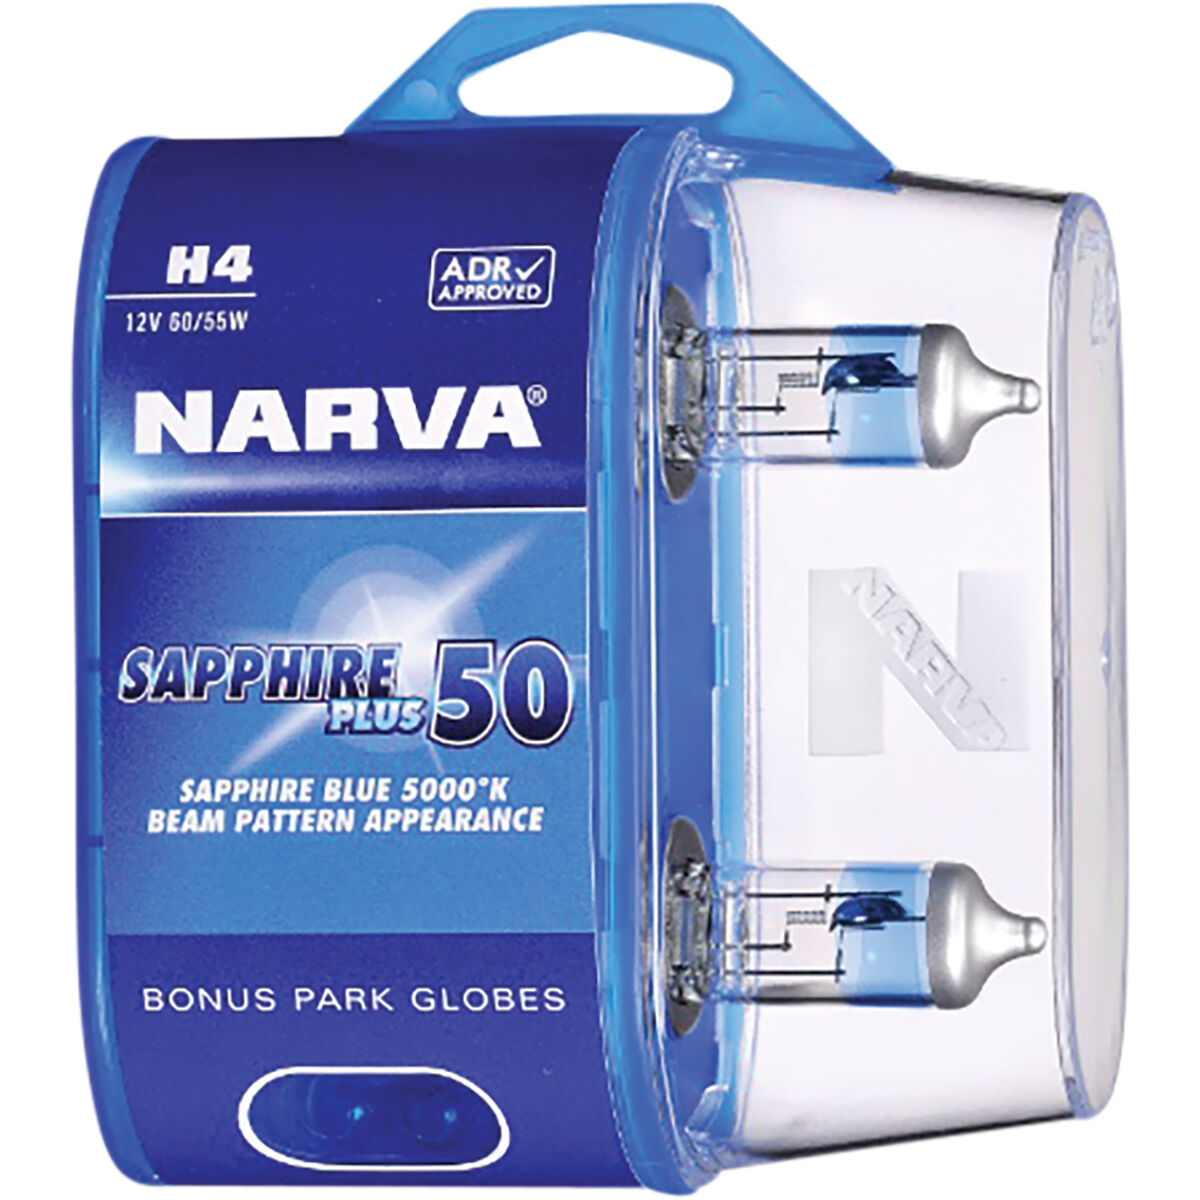 Narva Sapphire Plus 50 Headlight Globes - H4, 12V 60/55W, 48522BL2, , scaau_hi-res